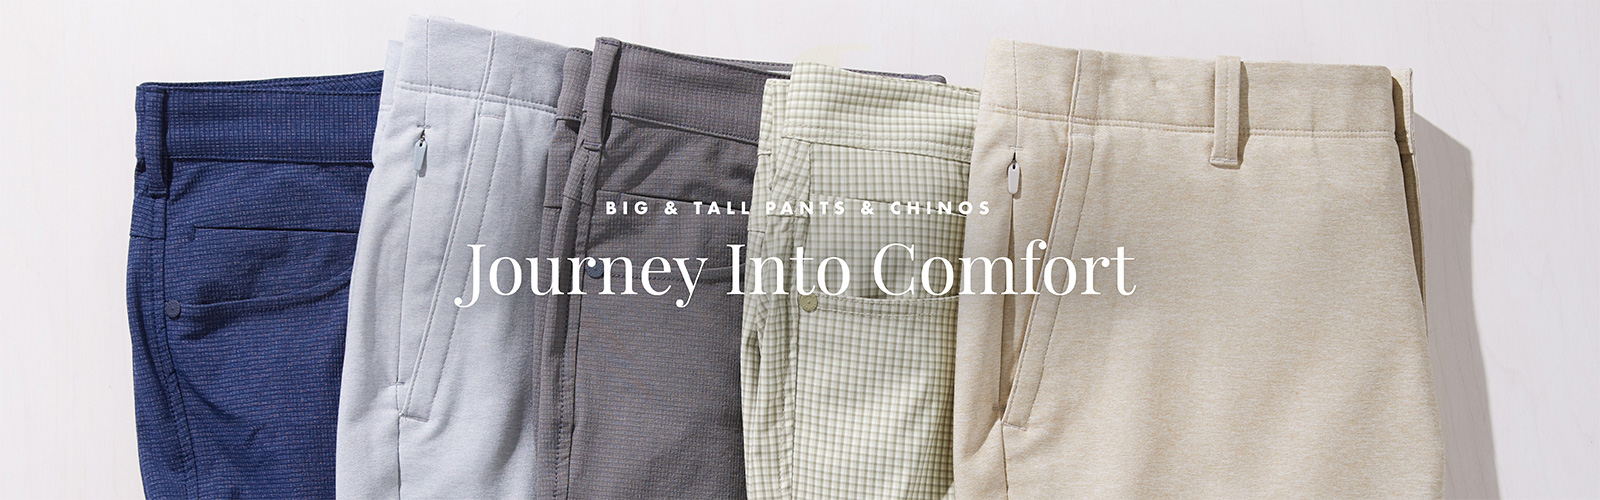 Big & Tall Pants & Chinos - Journey Into Comfort